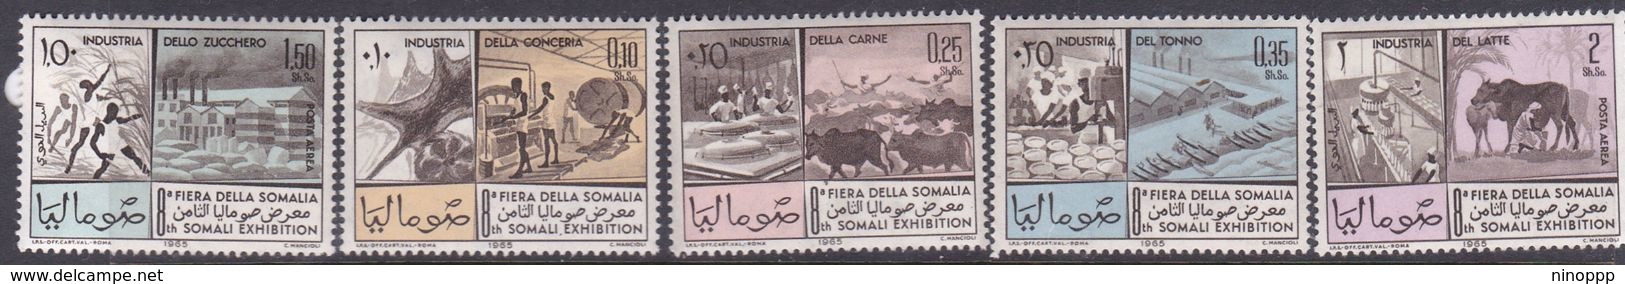 Somalia Scott 279-281 + C101-102 1965 8th Somali Fair, Mint Never Hinged - Somalia (AFIS)